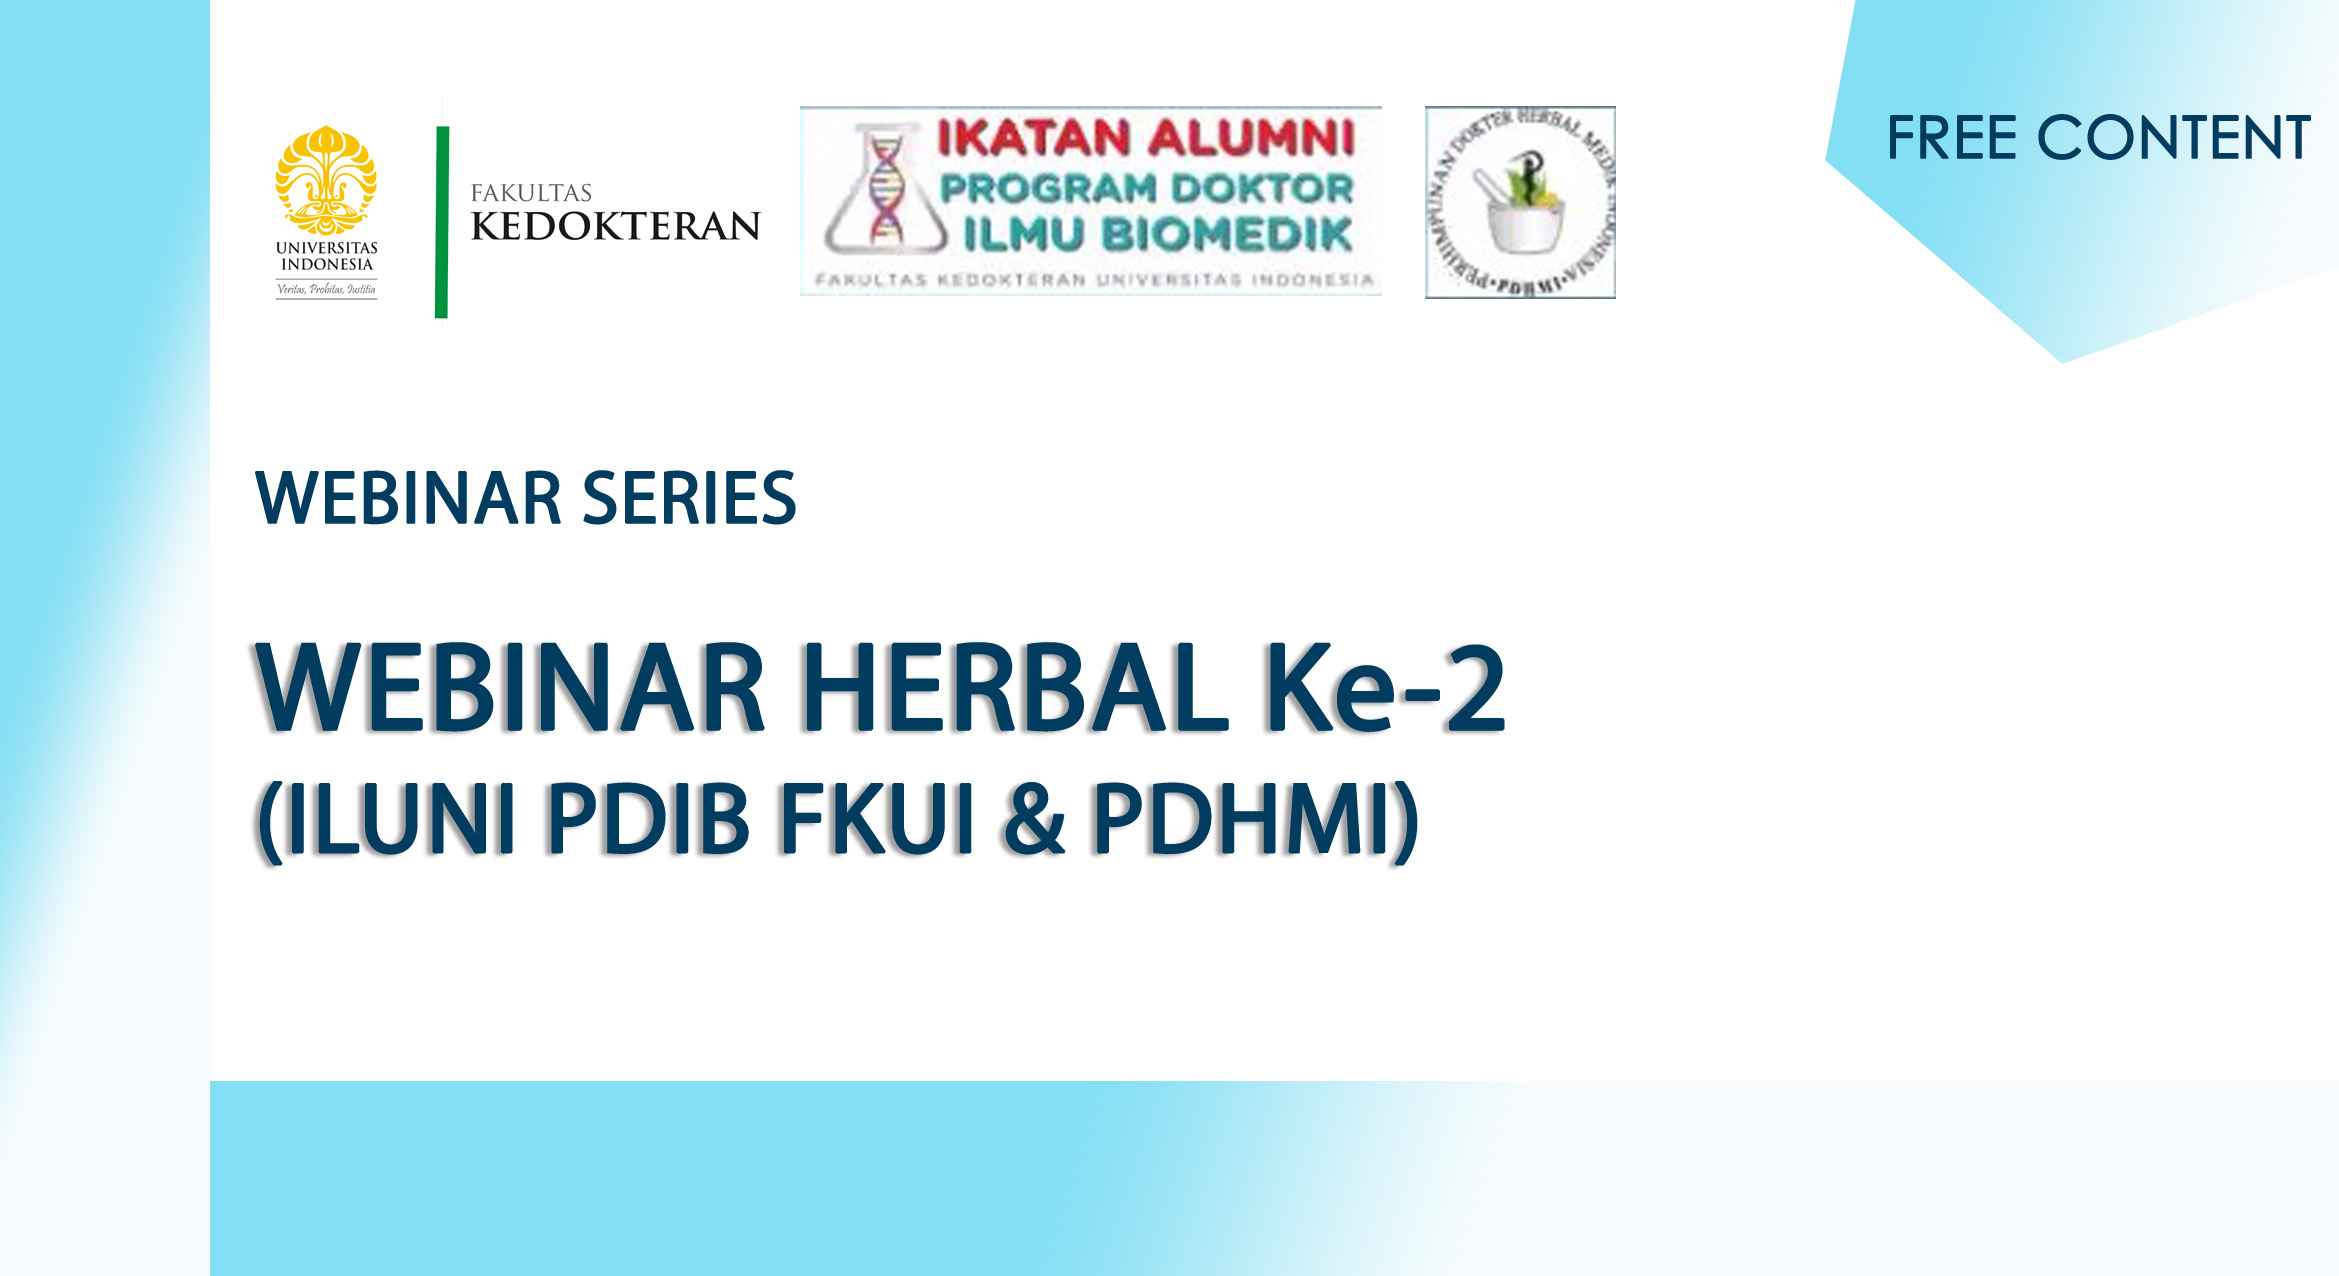 Webinar Herbal Series Ke-2 ILUNI PDIB FKUI & PDHMI 